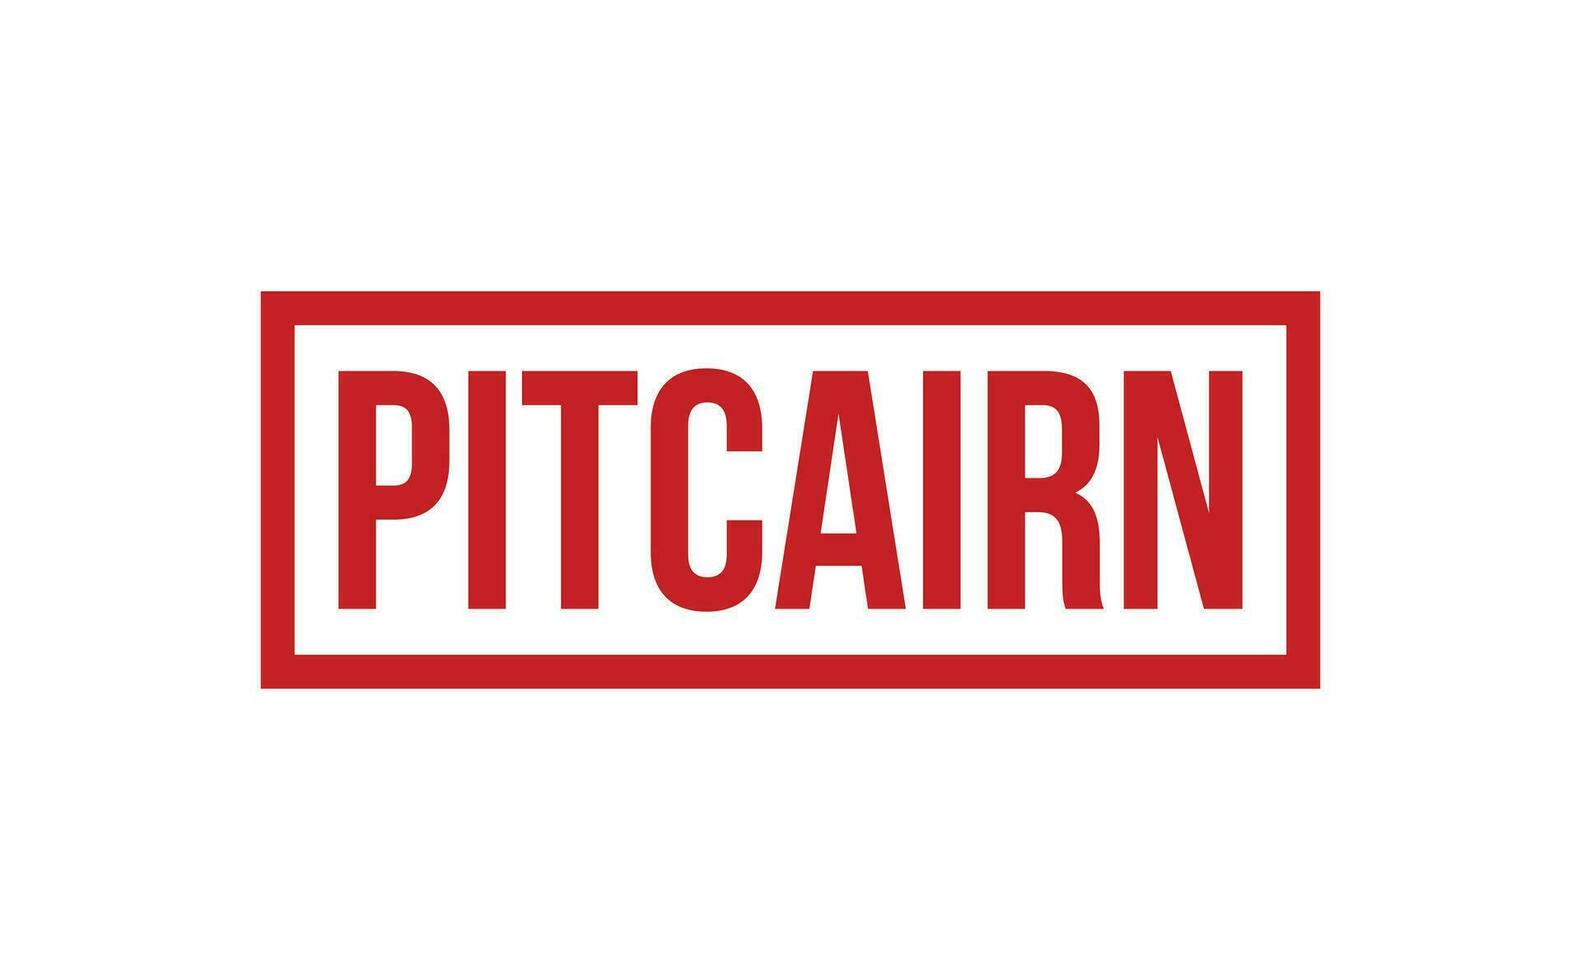 Pitcairn Gummi Briefmarke Siegel Vektor